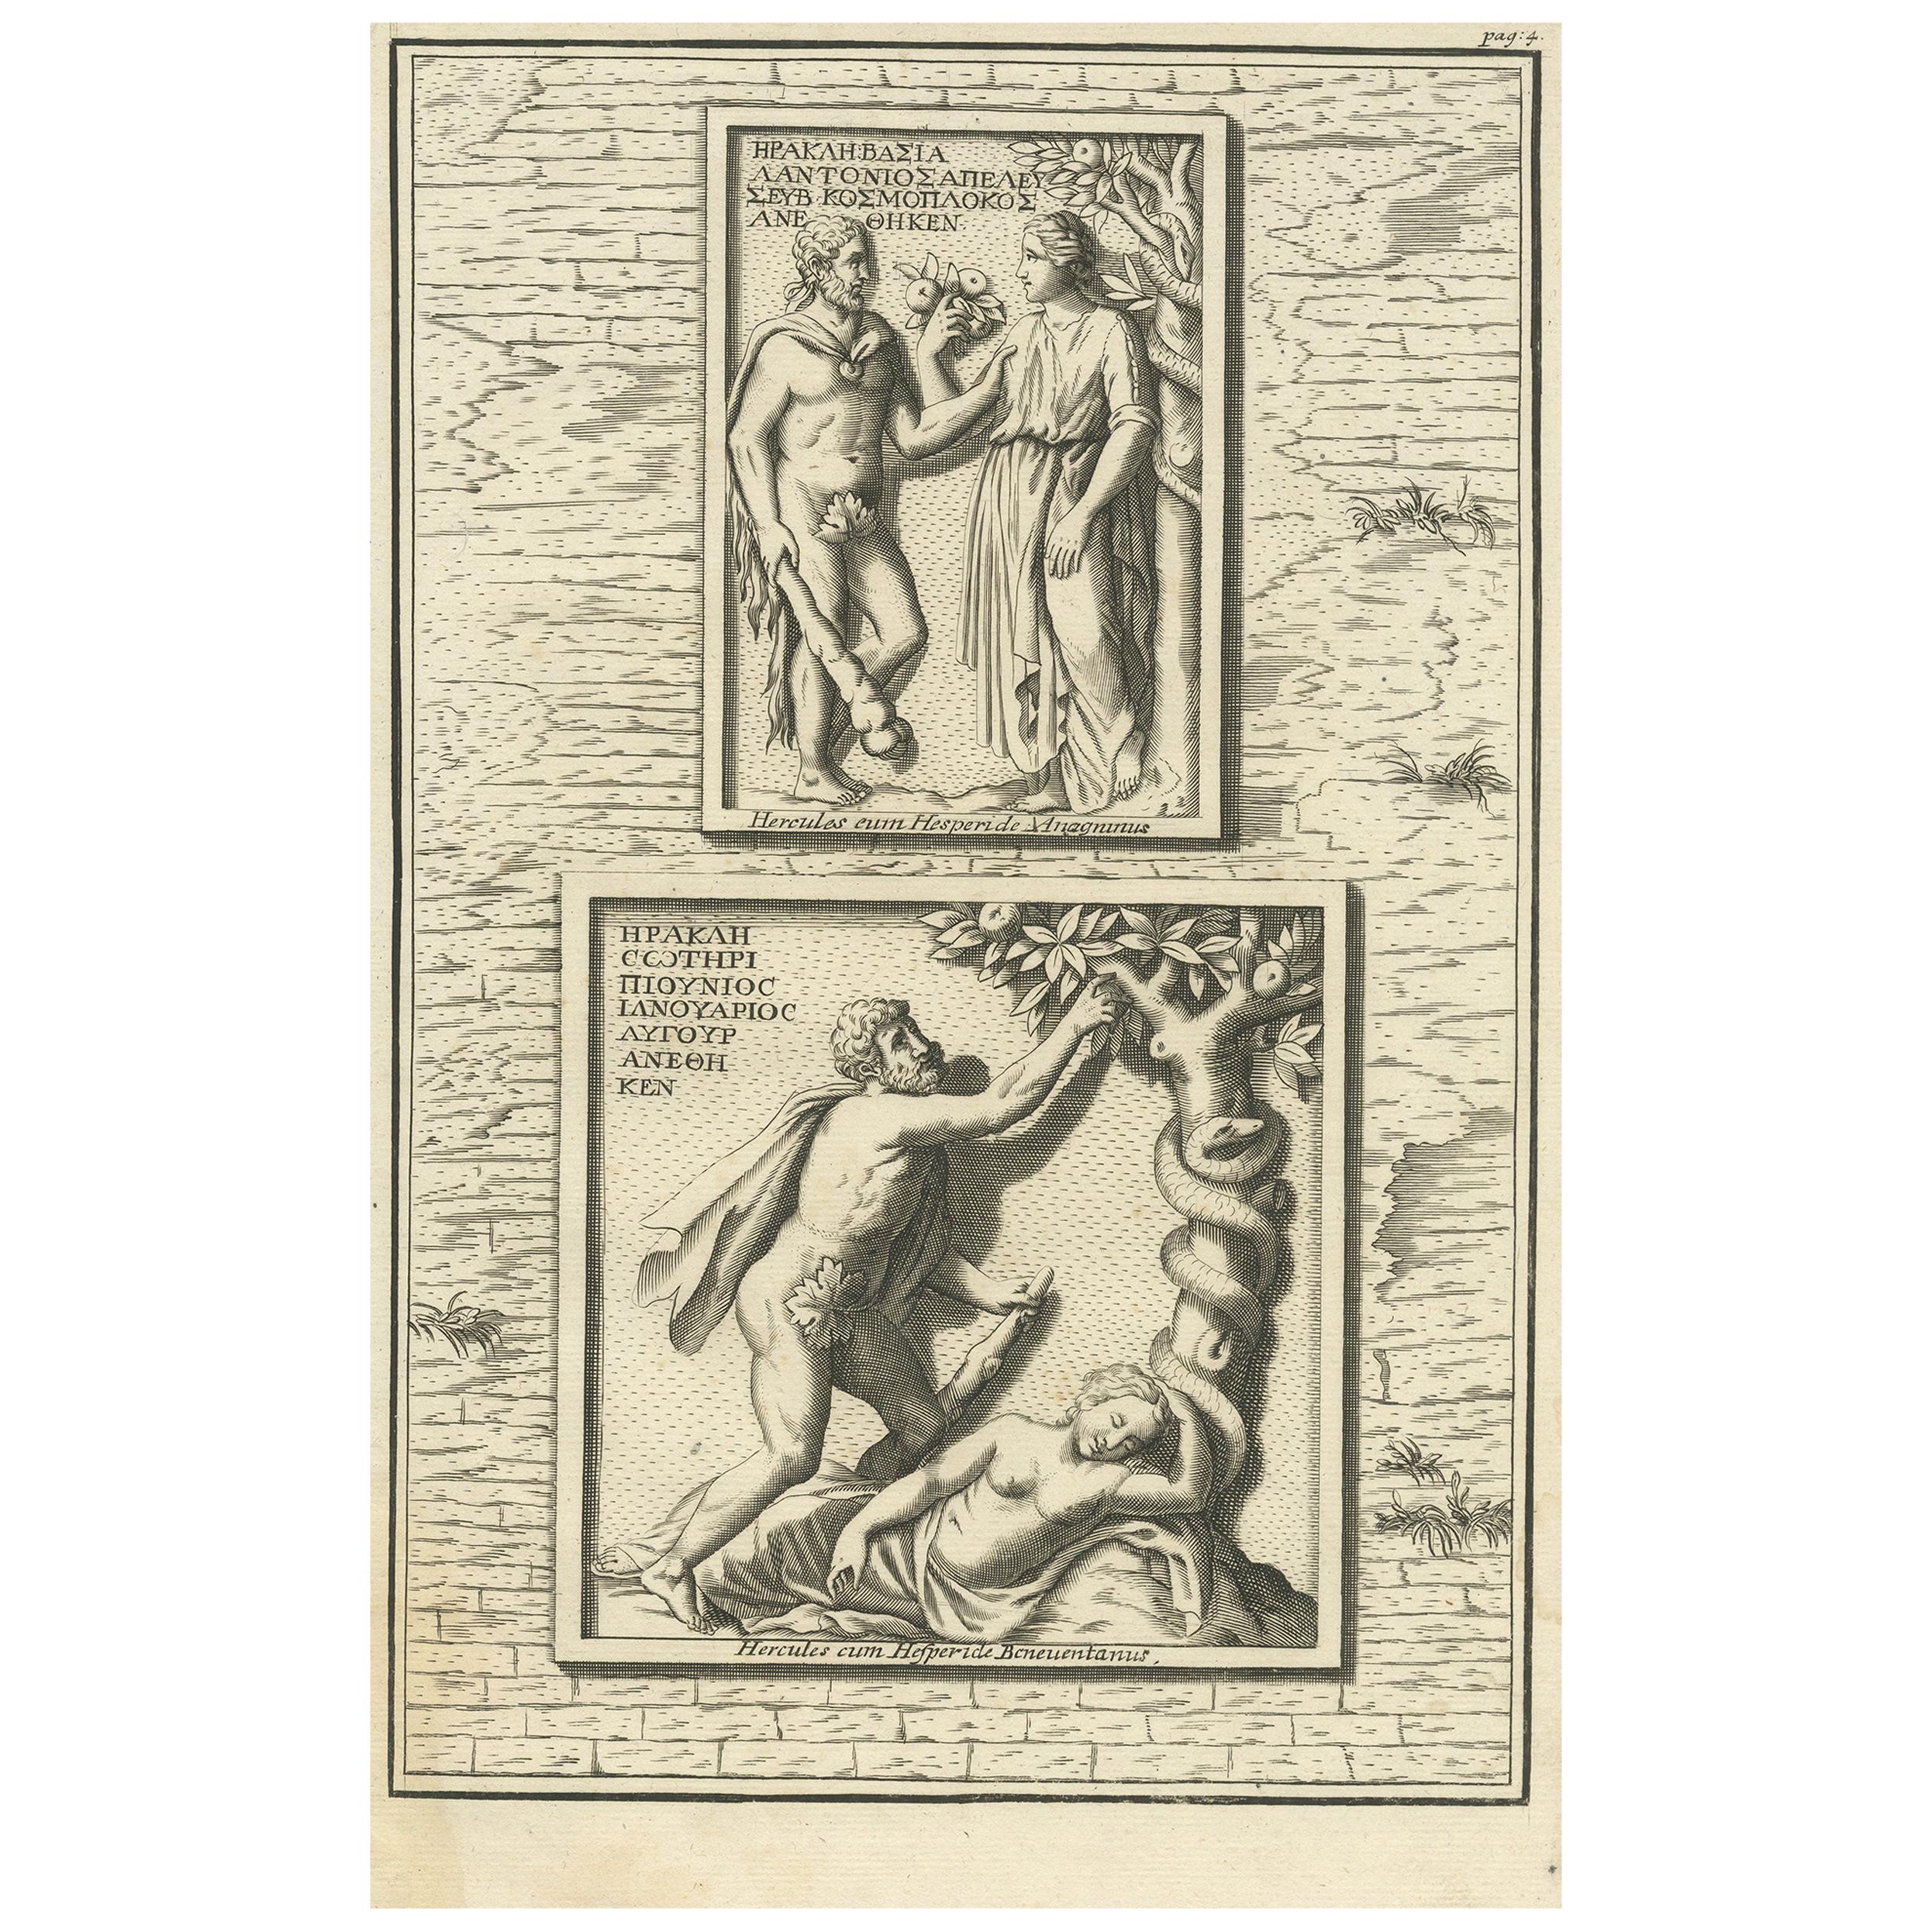 Antique Print of Hercules in the Garden of Hesperides by Volckamer, circa 1710